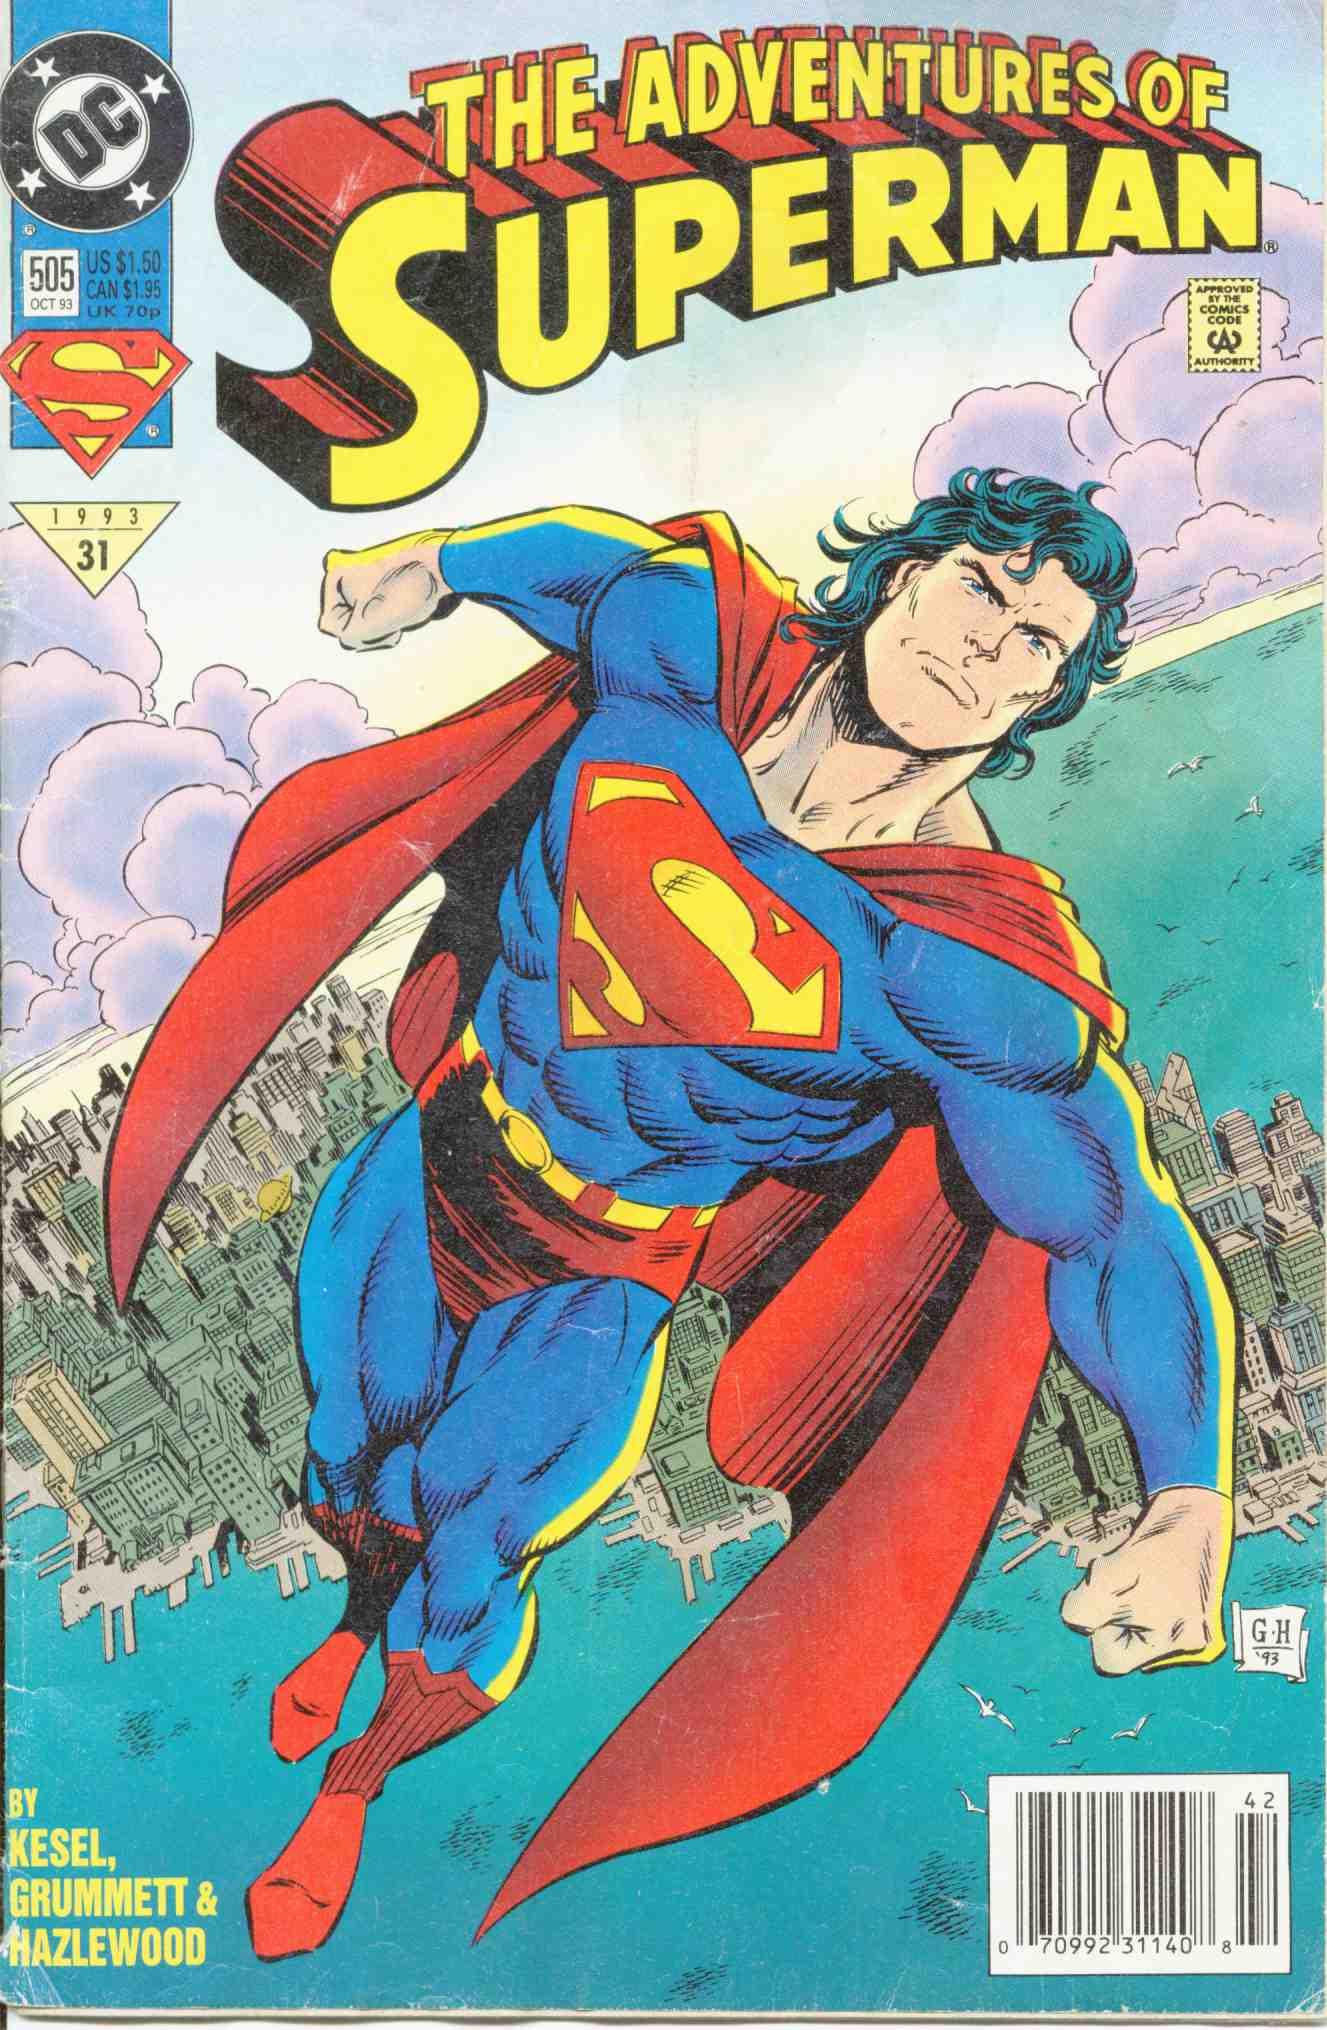 The Adventures of Superman Vol. 1 #505